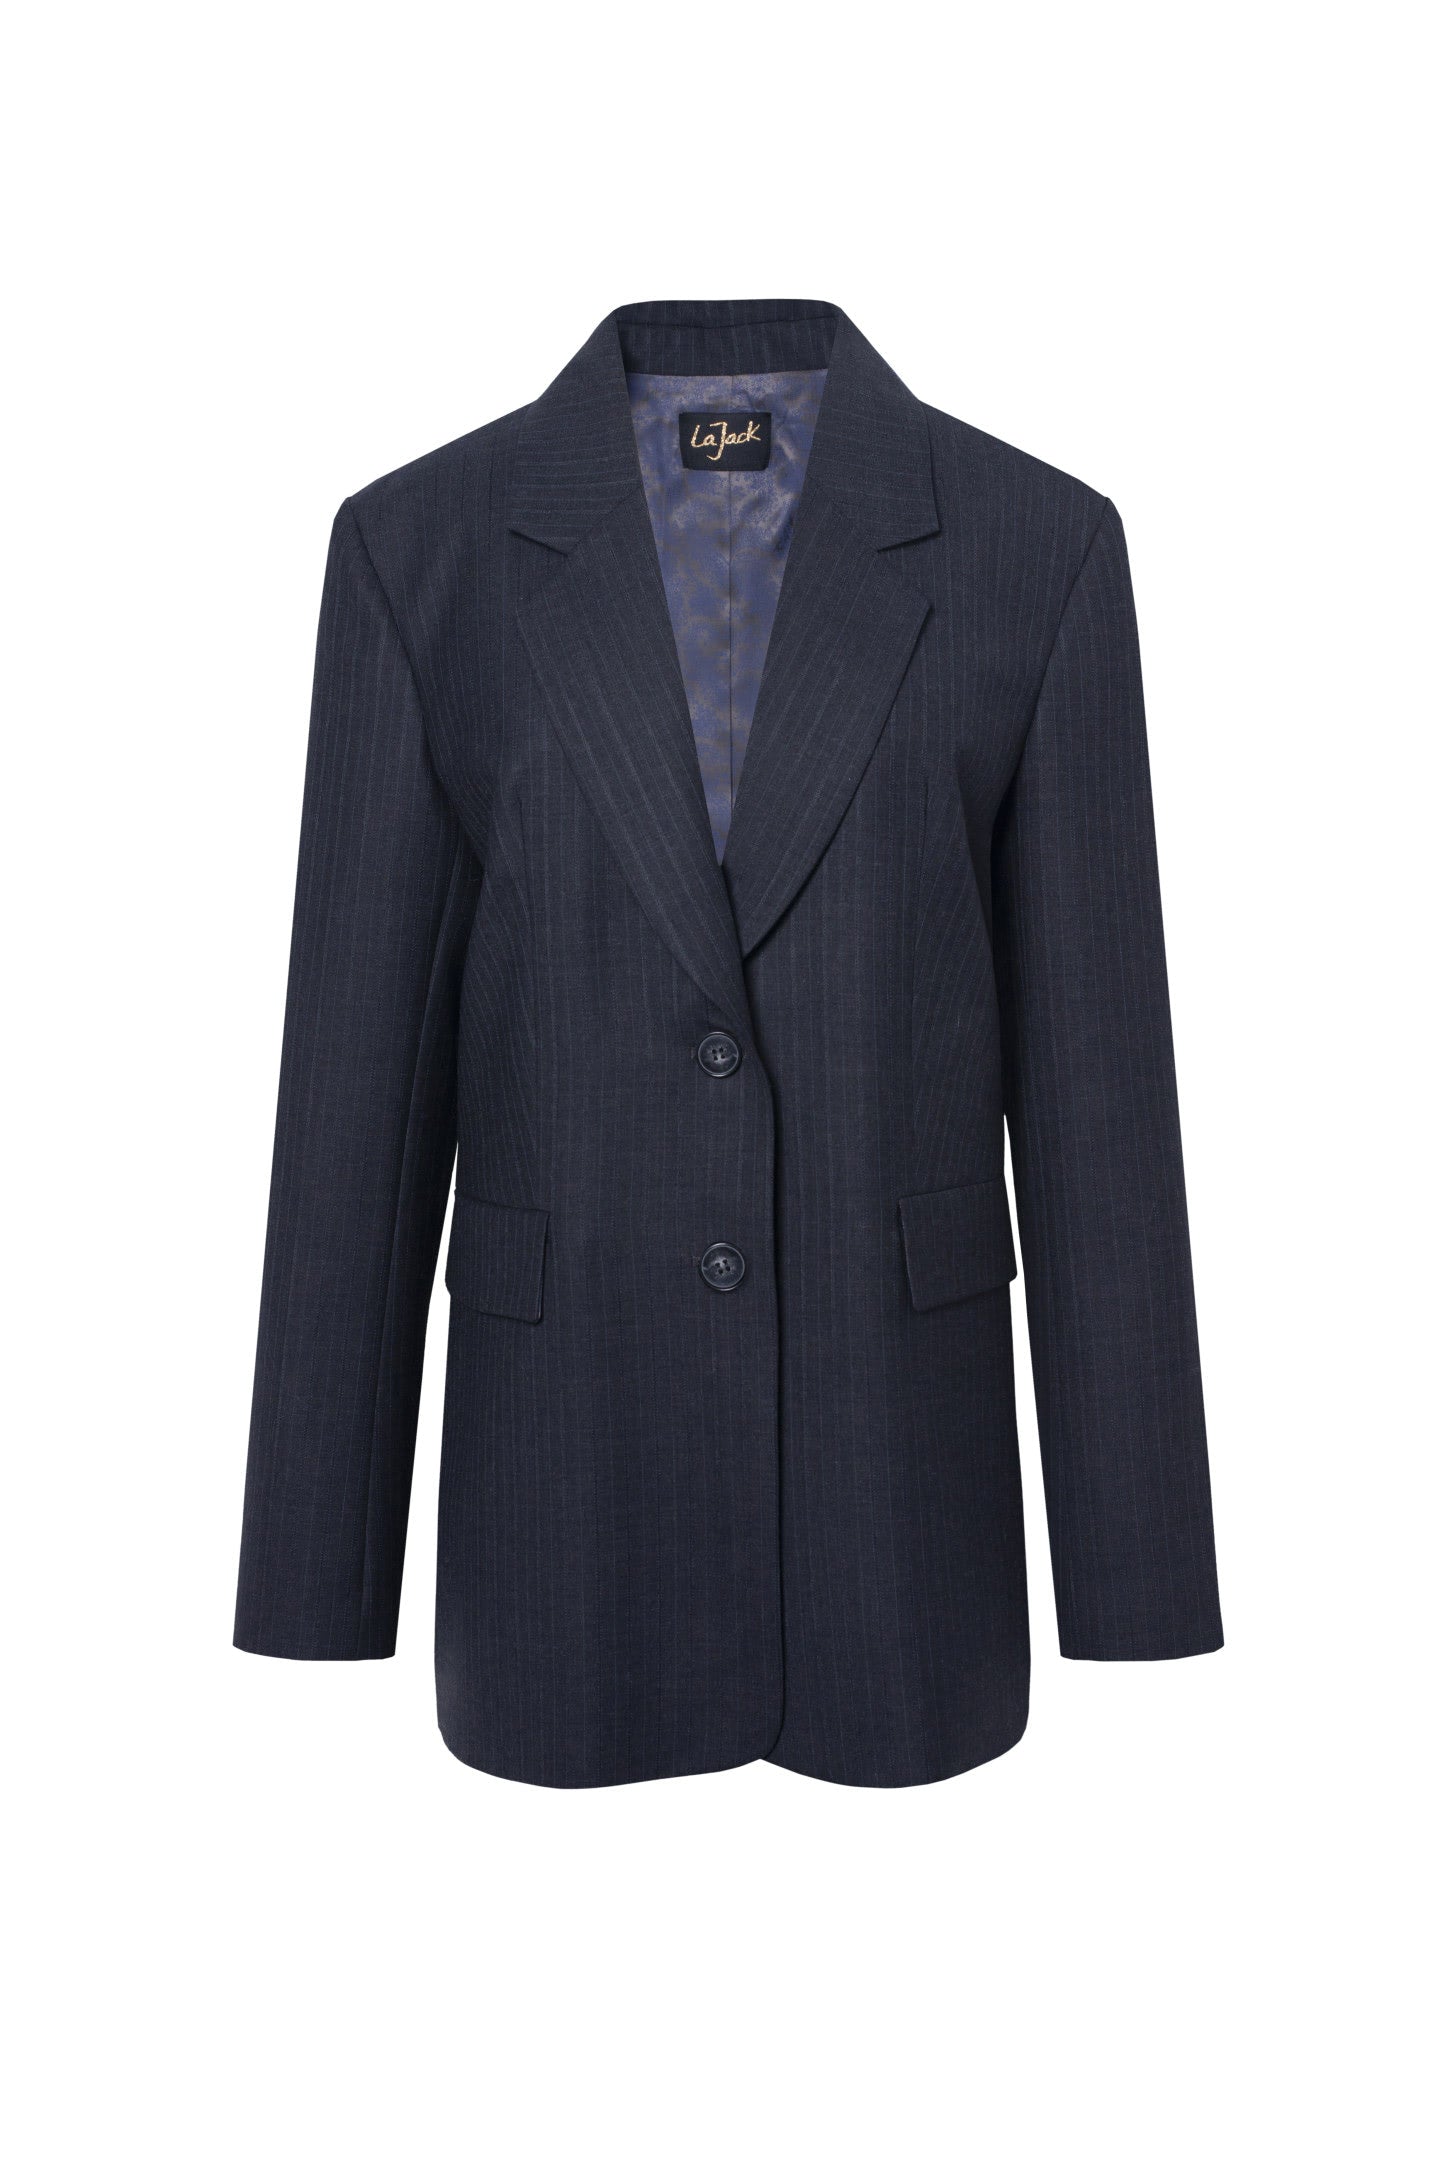 La Joséphine - Oversized Gray Wool Blazer Jacket with Thin Blue Stripes, Mauve Gold Cashmere Lining 